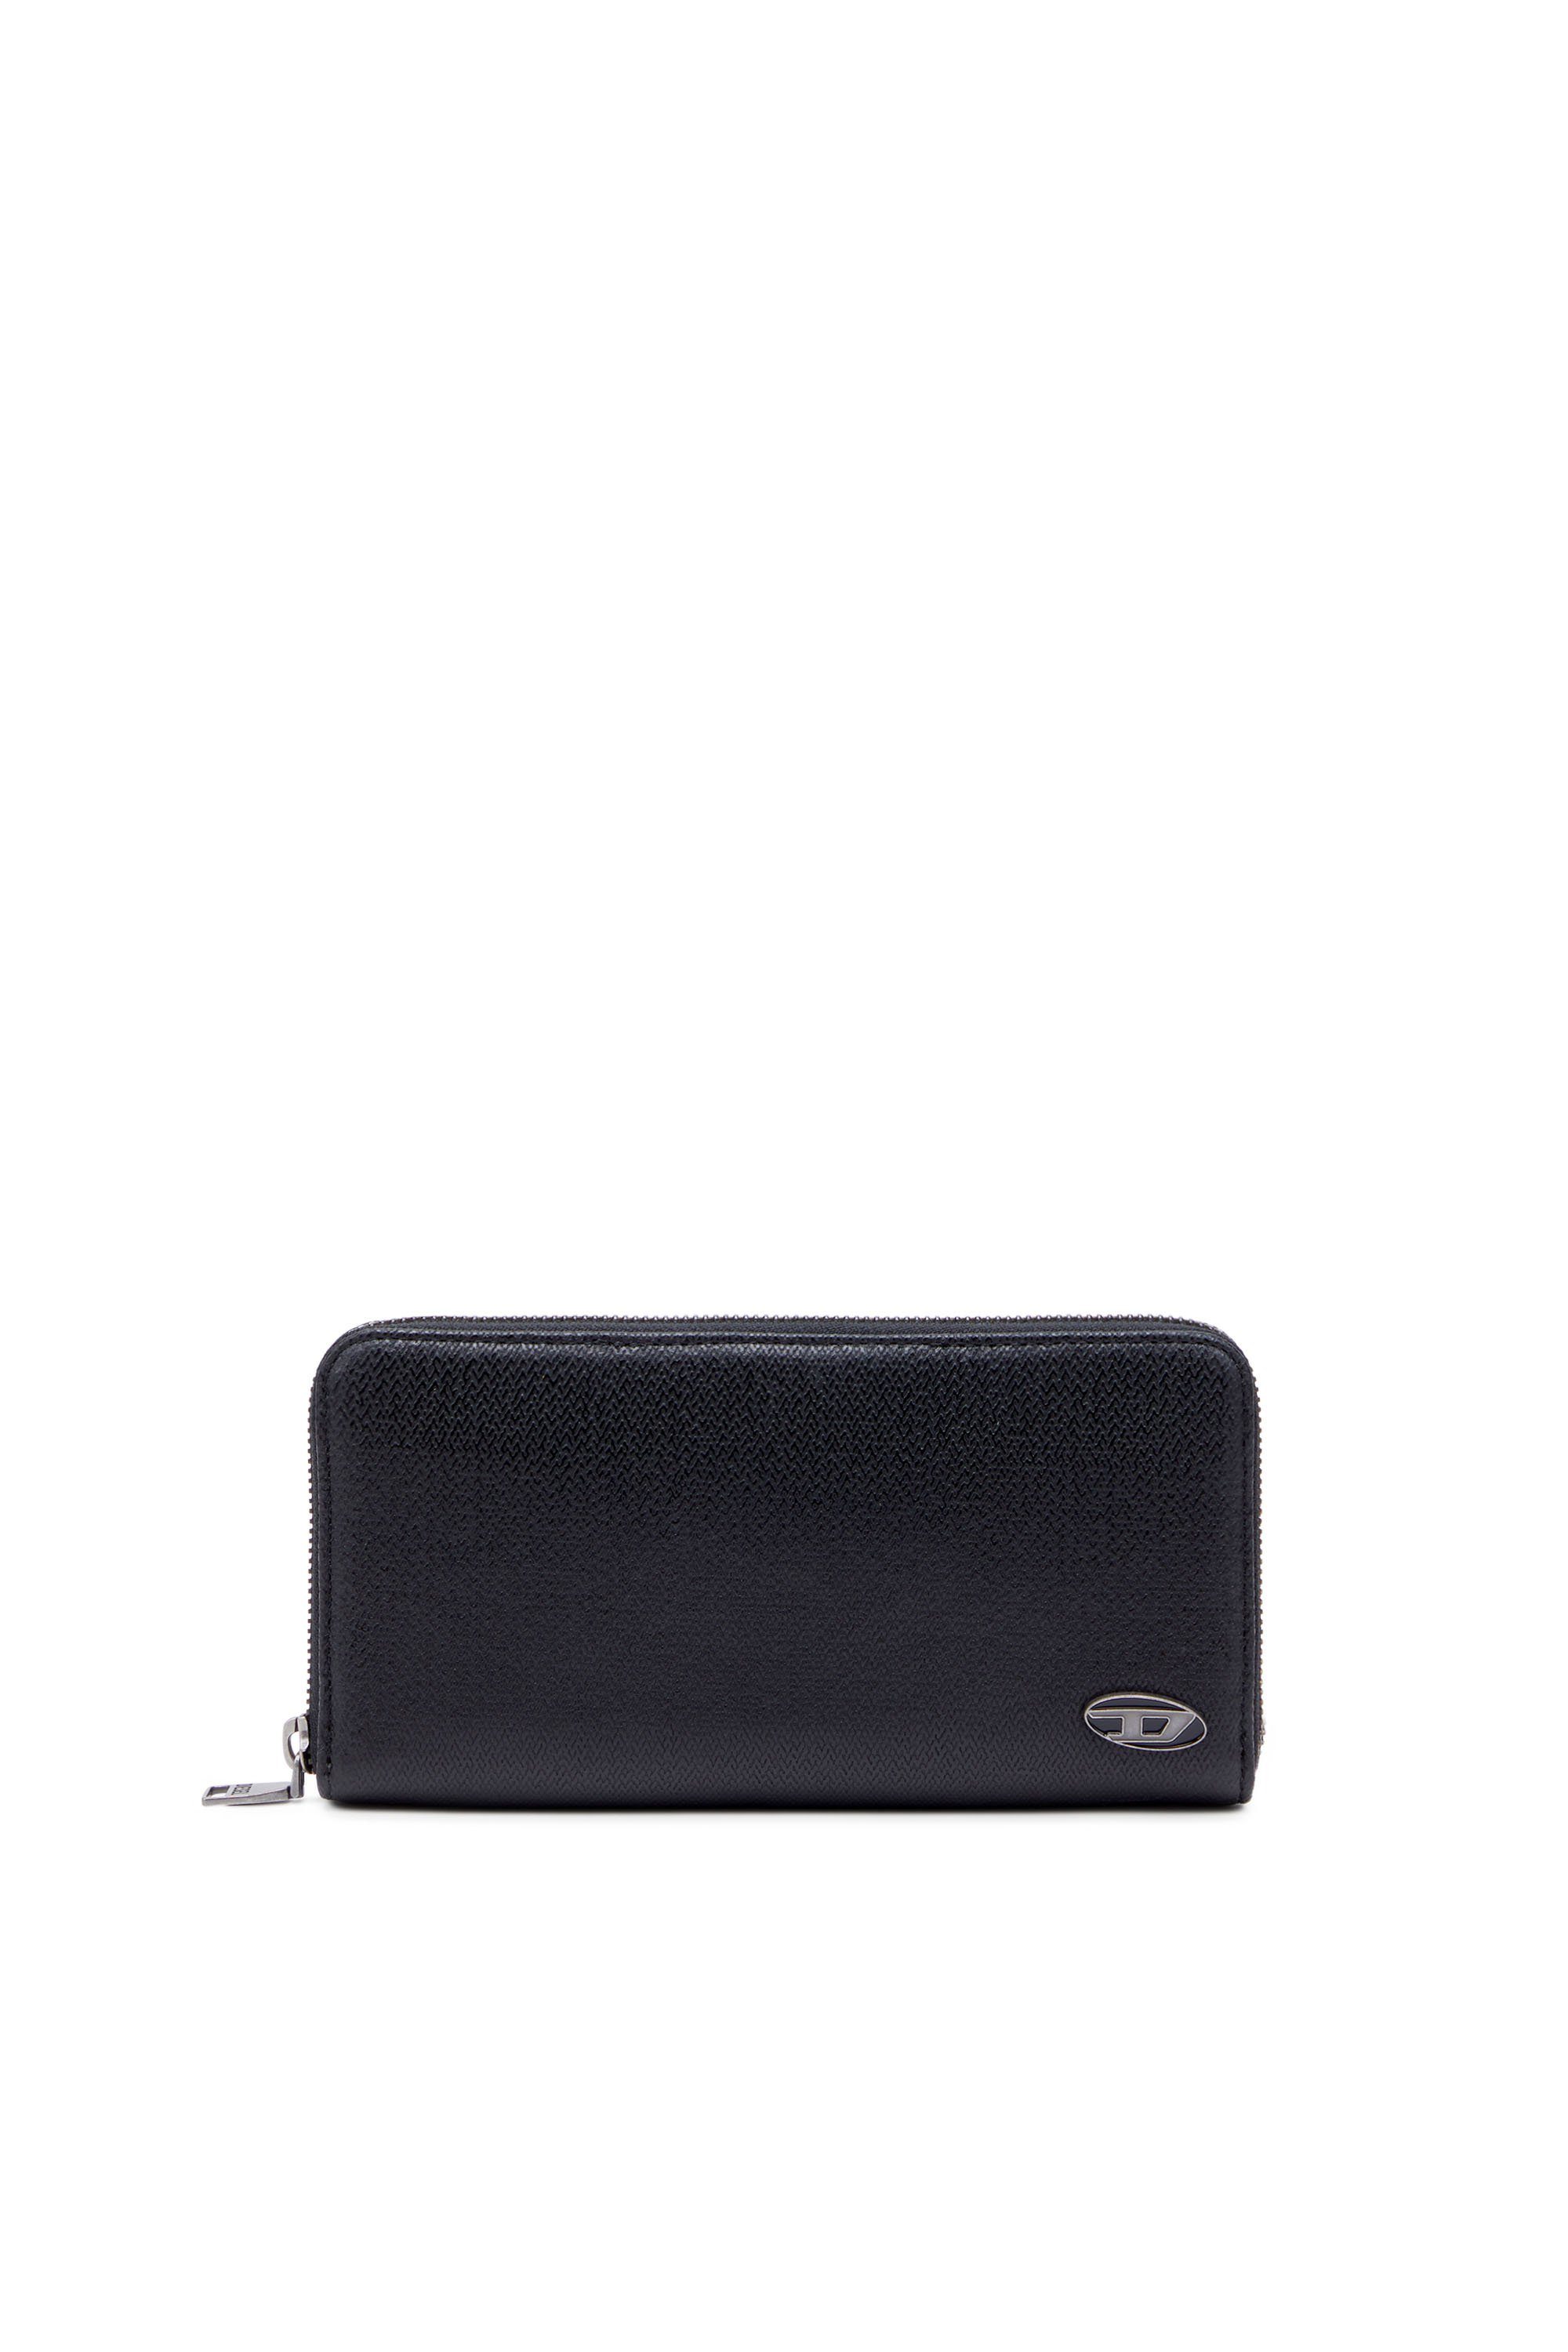 Diesel - Long zip wallet in textured leather - Small Wallets - Man - Black